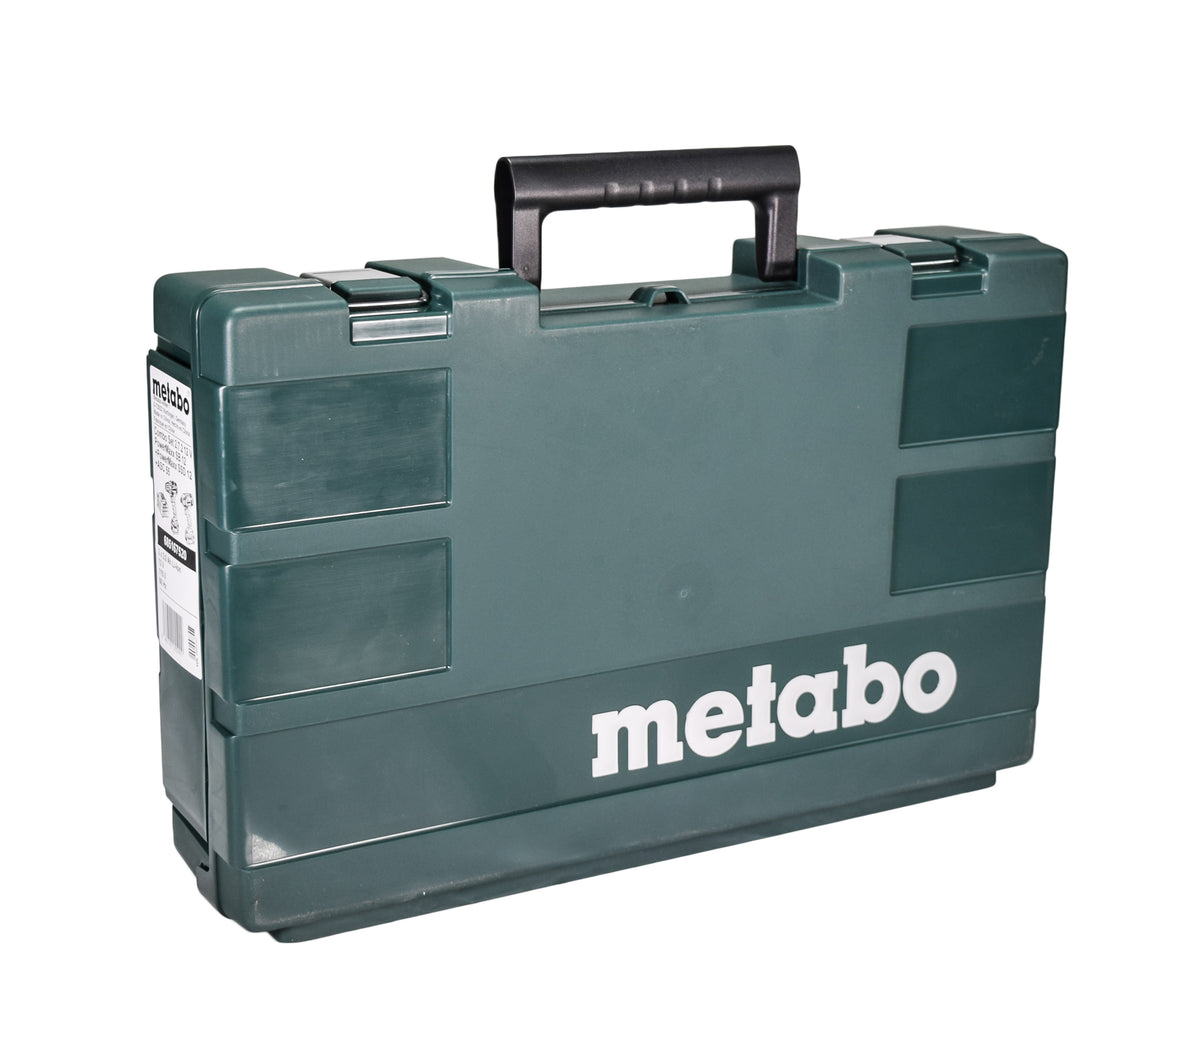 Metabo 685167520 Powermaxx 2.7.2 12 V Cordless Machines Combo Set